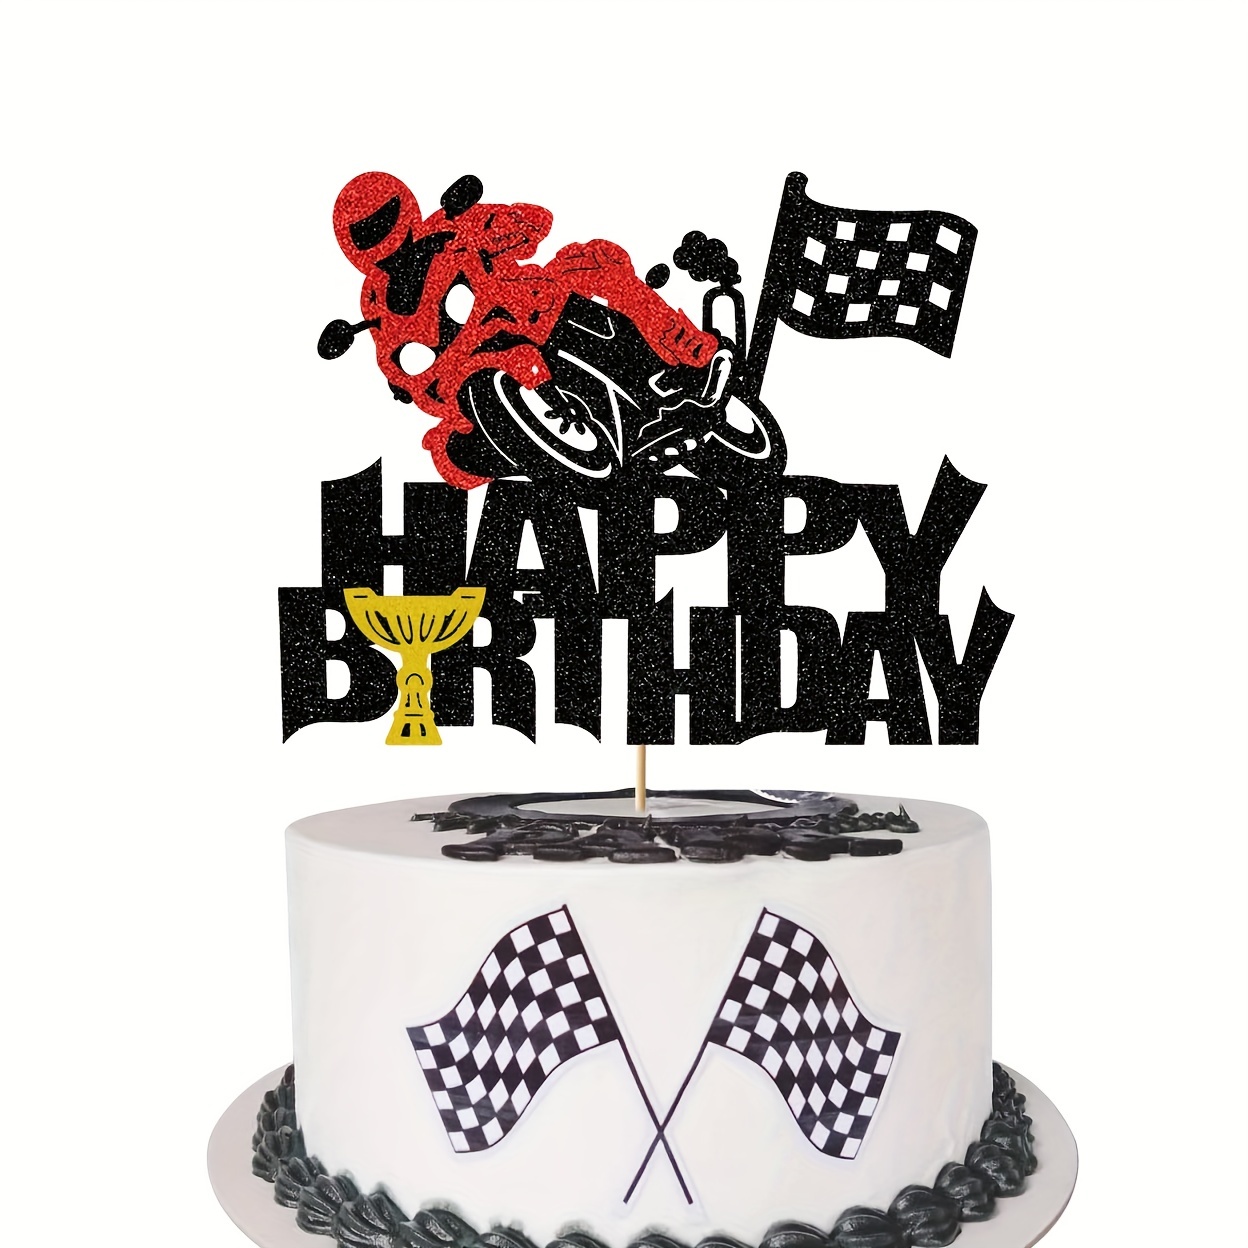 Douxamourpasteleria - Tarta De cumpleaños Spiderman Tarta negra colombiana  ( tarta envinada) #tarta #bolo #gateau #torta #pastel #cake #cakebirthday  #bolodeaniversarioinfantil #bolodeaniversario #gateaudanniversaire  #tortadecumpleaños